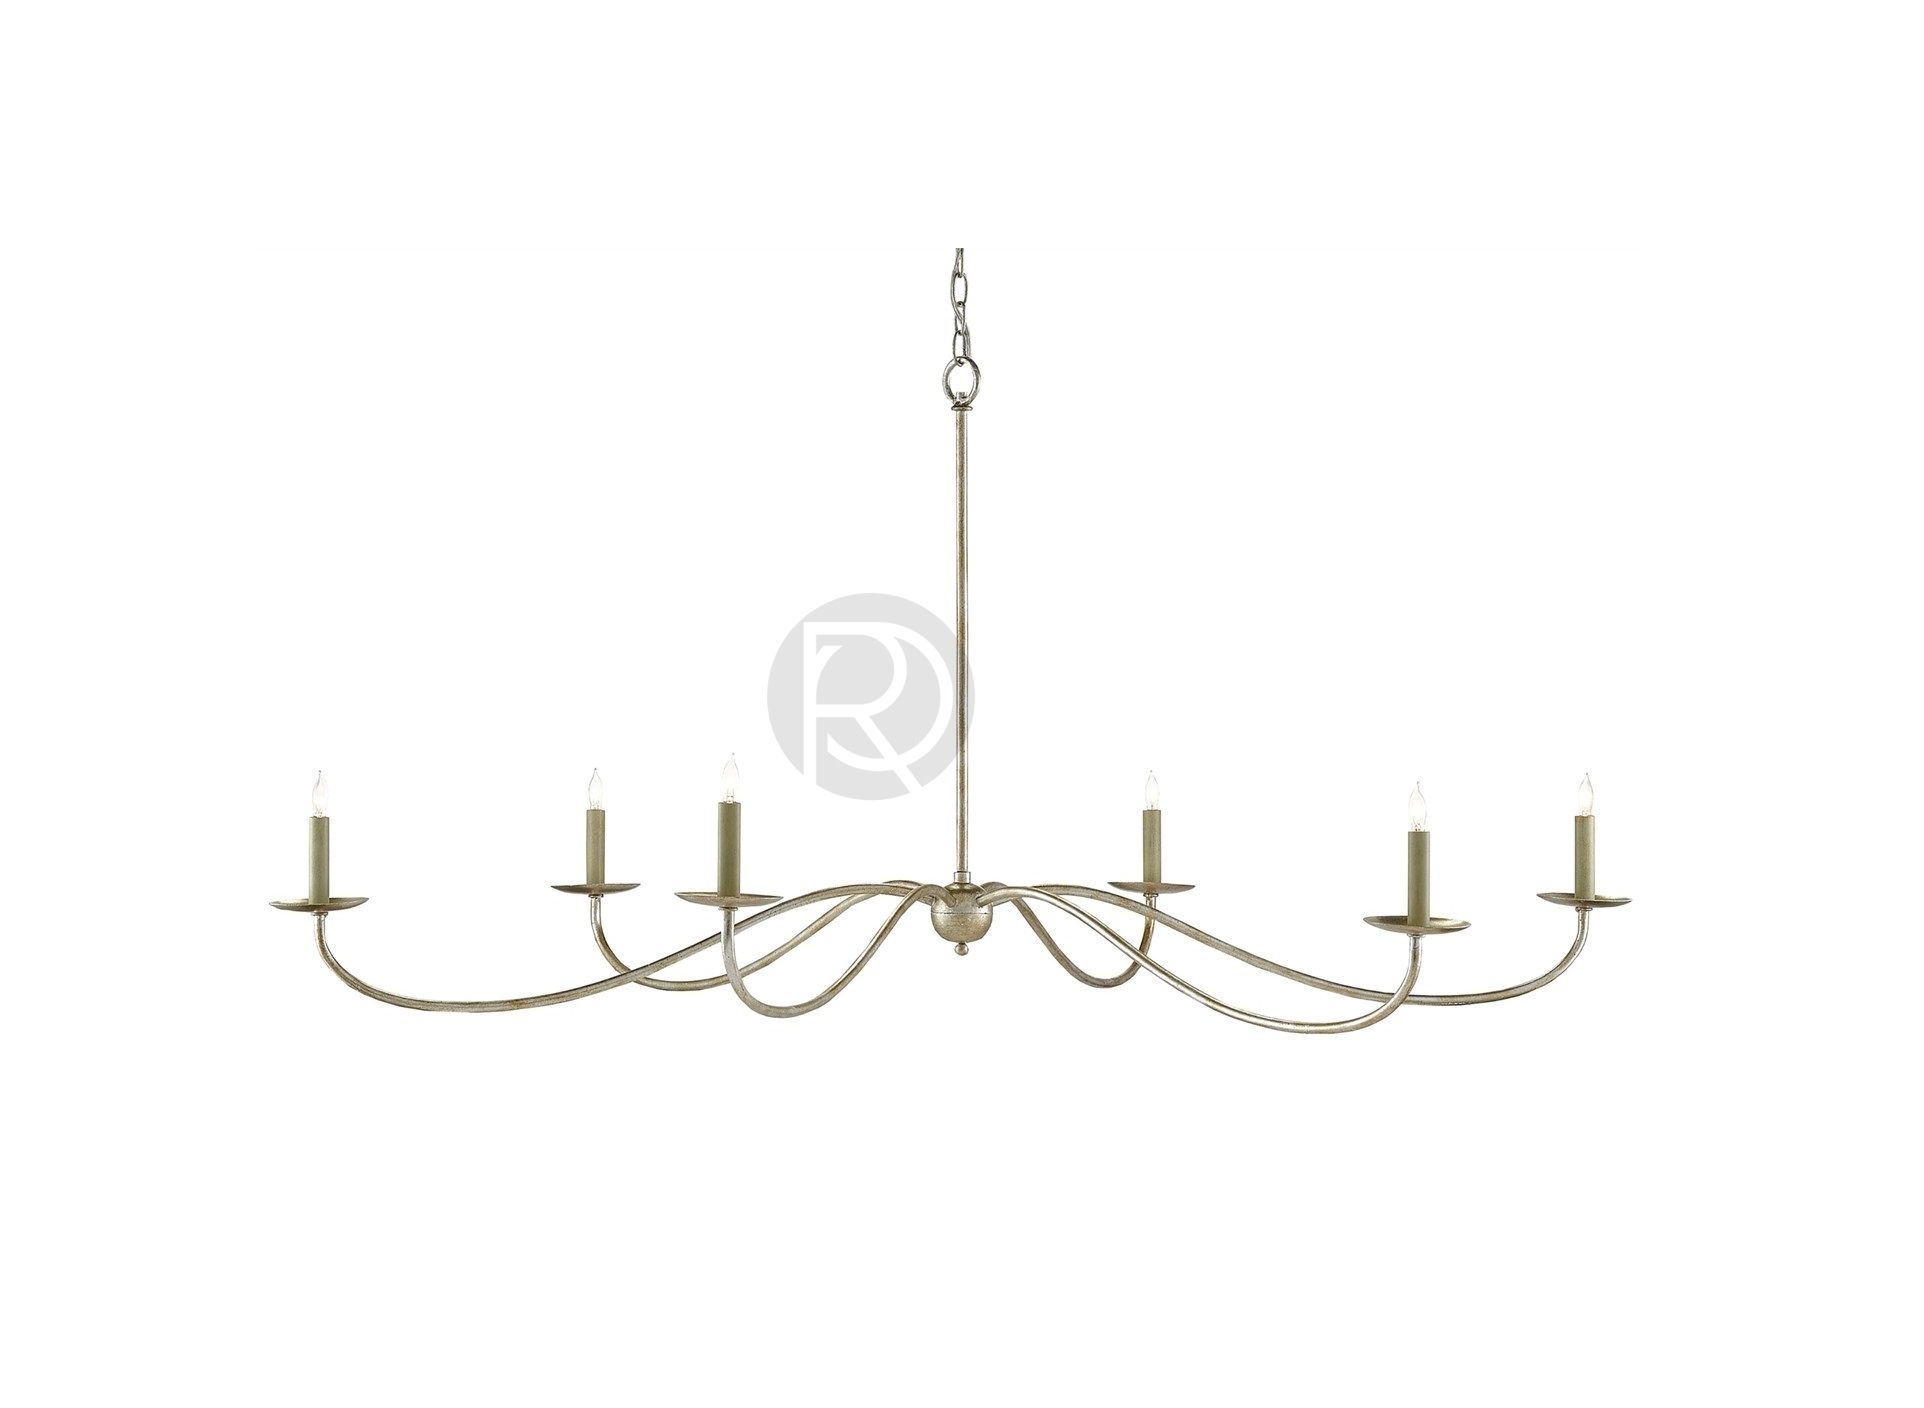 SAXON chandelier by Currey & Company